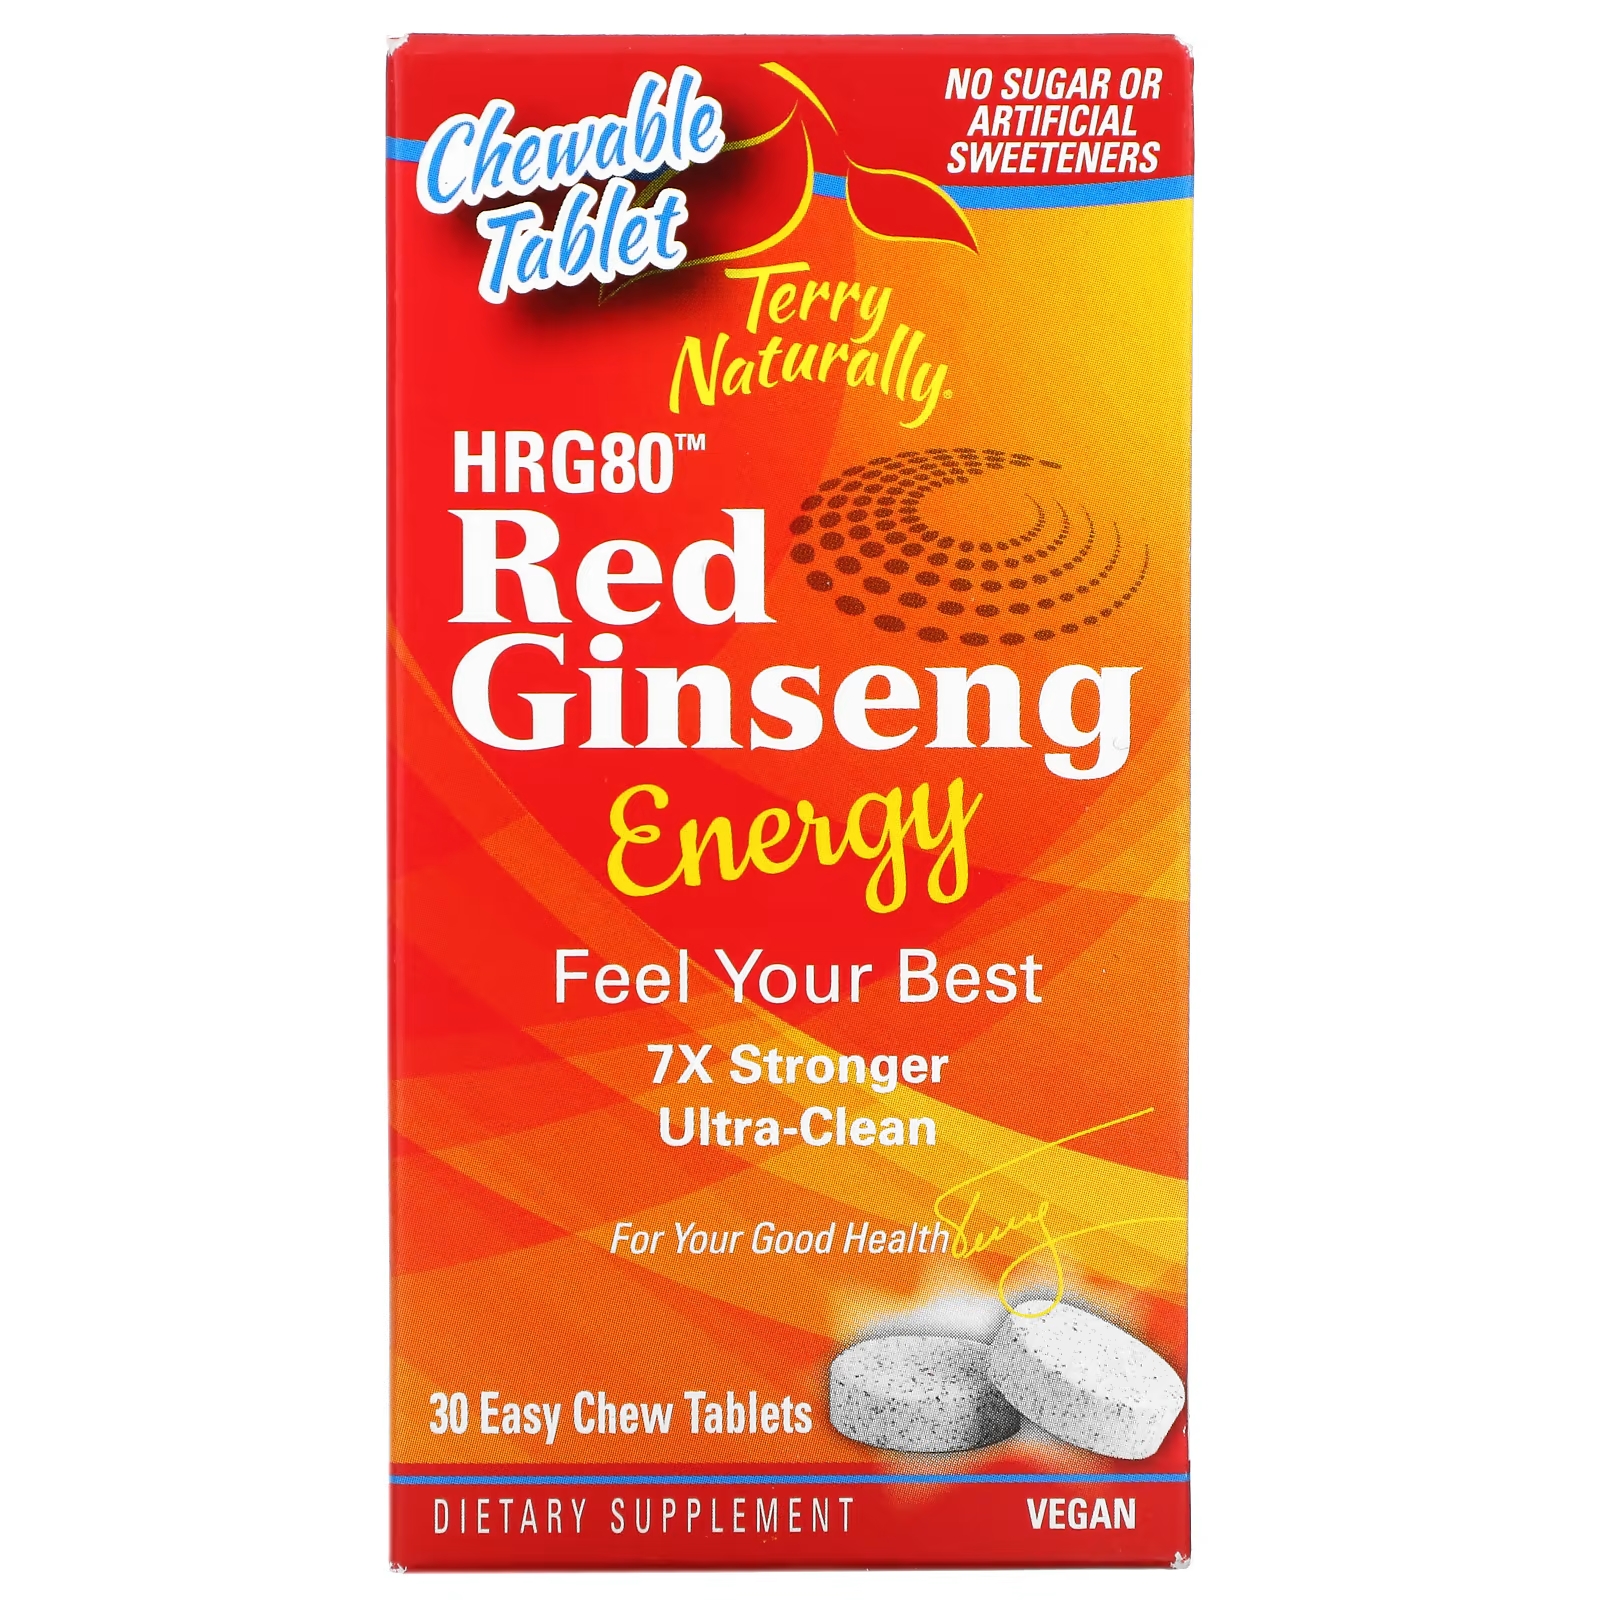 Пищевая Добавка Terry Naturally HRG80 Red Ginseng Energy, 30 жевательных таблеток красный женьшень terry naturally hrg80 48 капсул